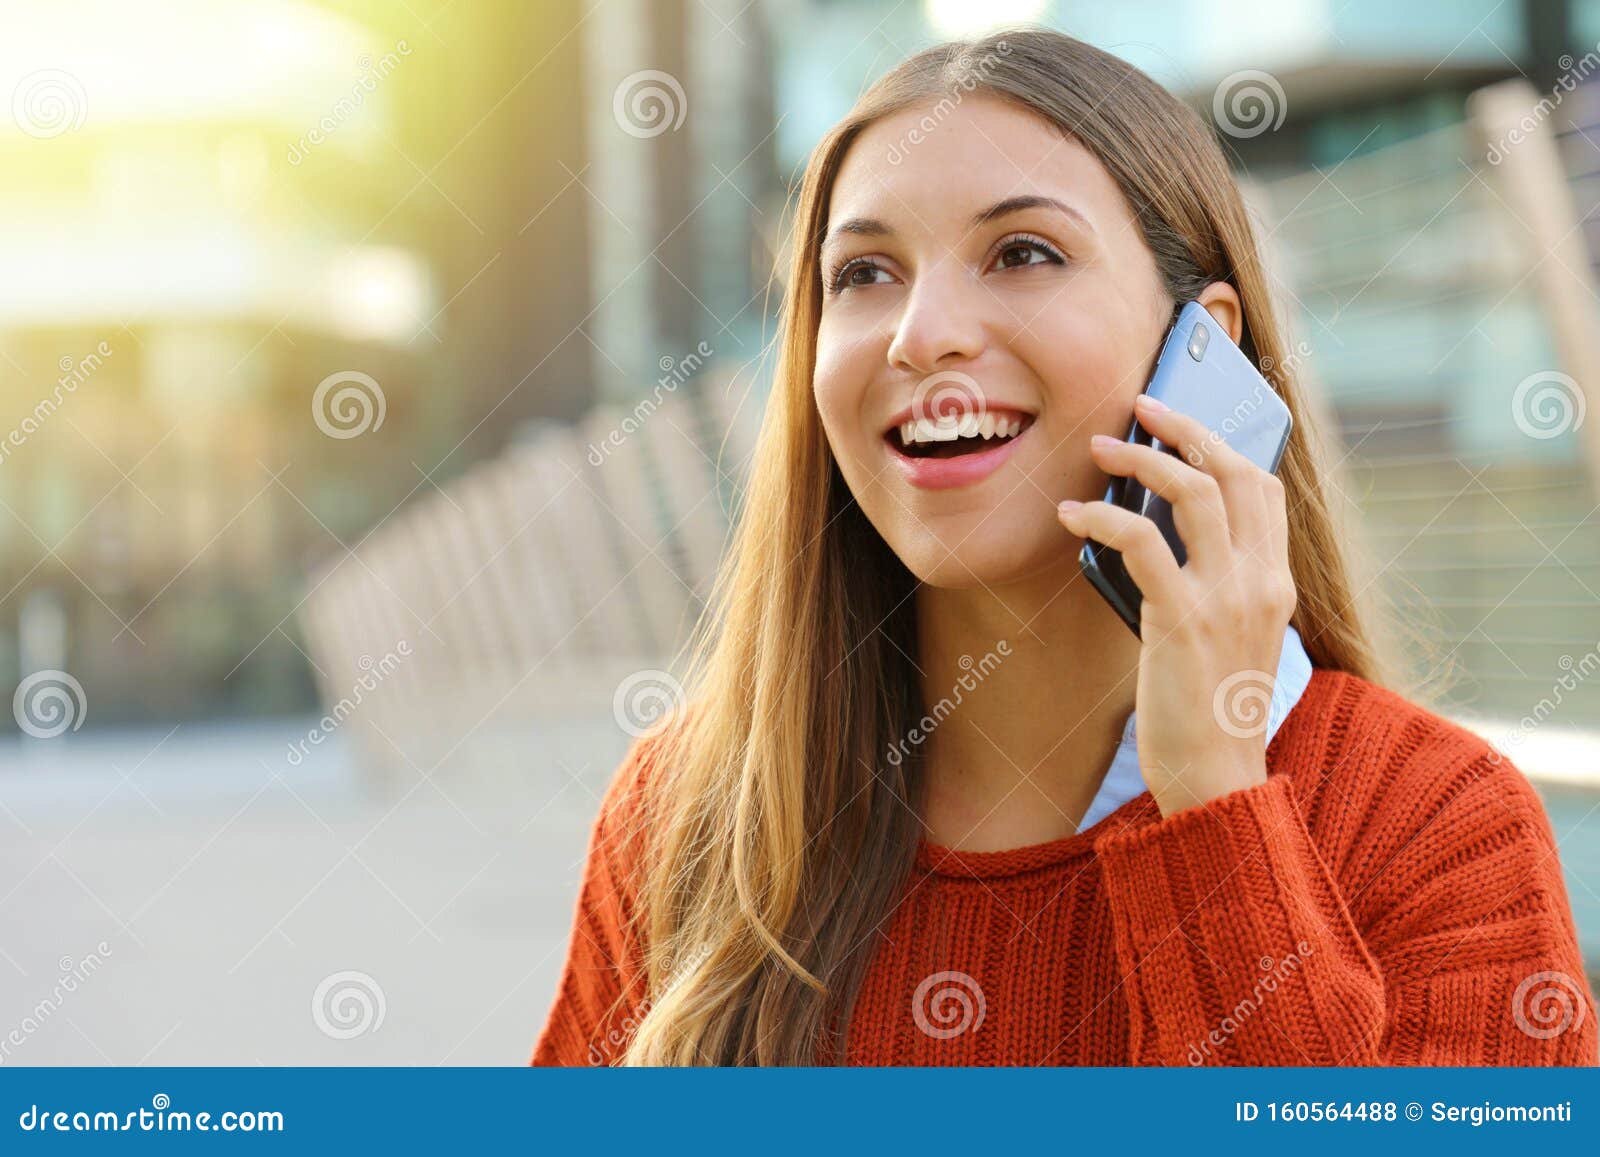 Карамелька разговаривает по телефону. Девушка со смартфоном у уха. Девушка разговаривает по айфону. Девушка с телефоном около уха. Смартфон у уха радостная девушка.